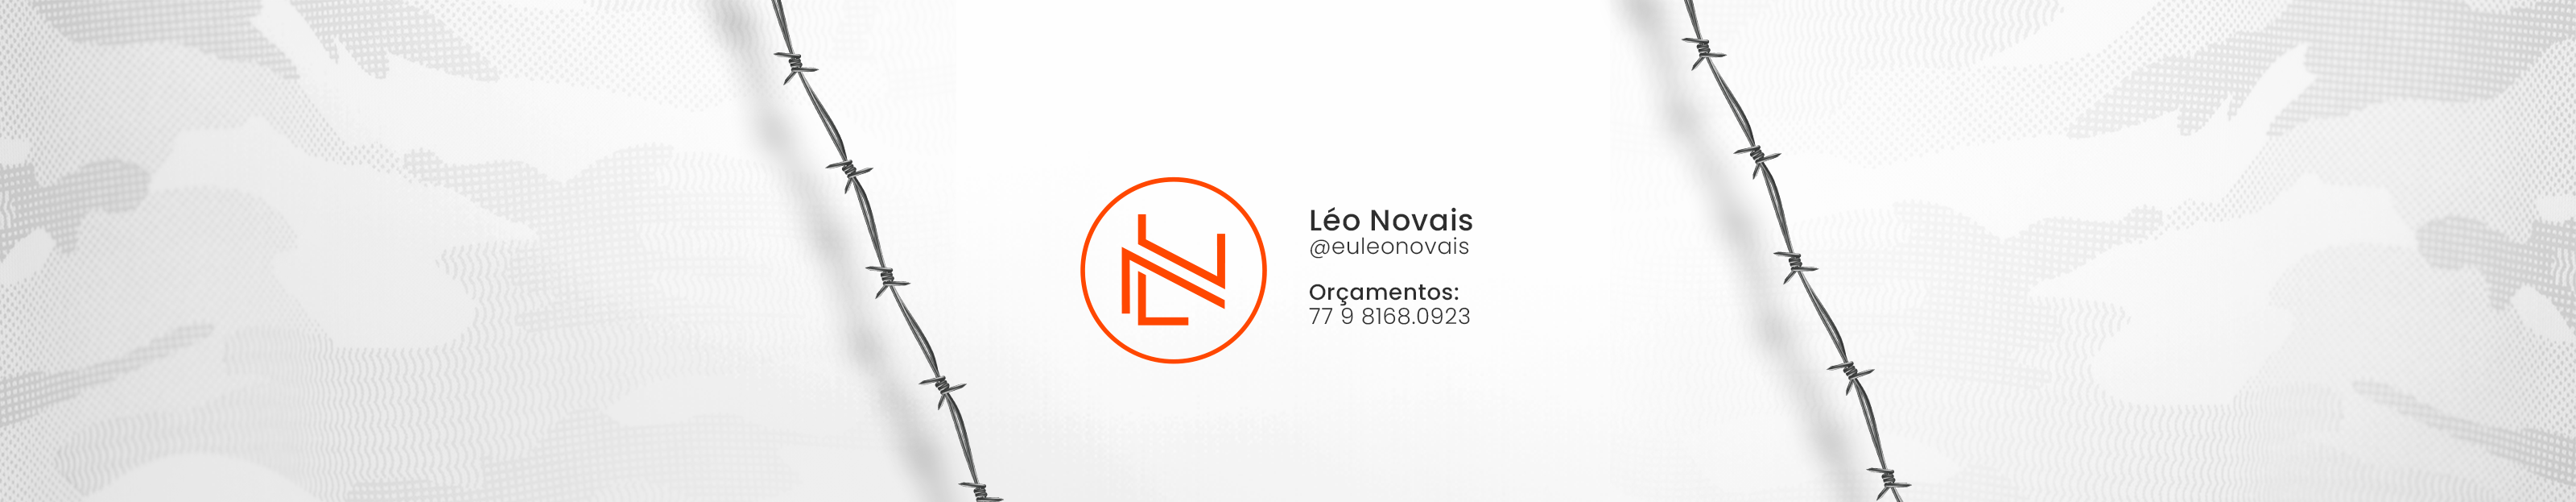 Leo Novais ✪s profilbanner